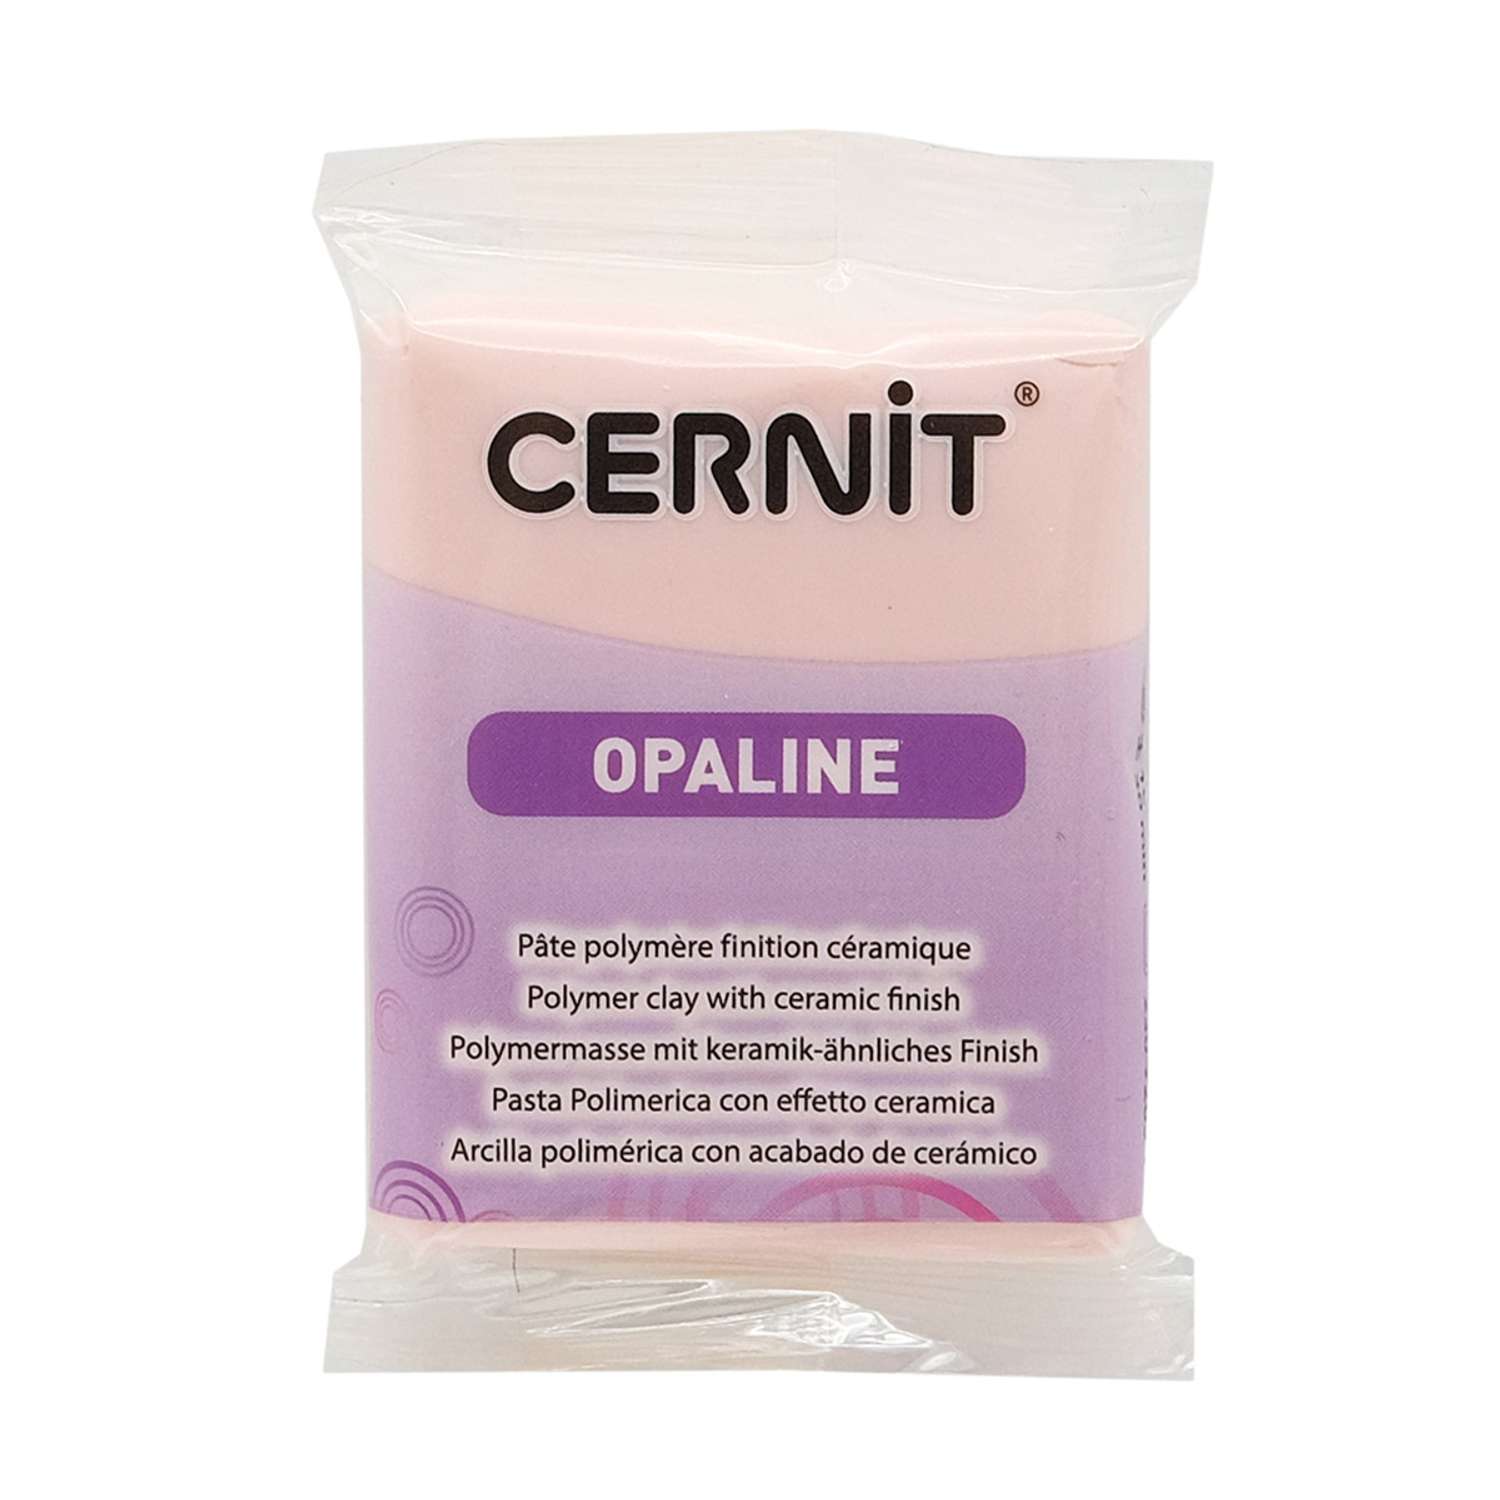 Полимерная глина Cernit пластика запекаемая Цернит opaline 56 гр CE0880056 - фото 7